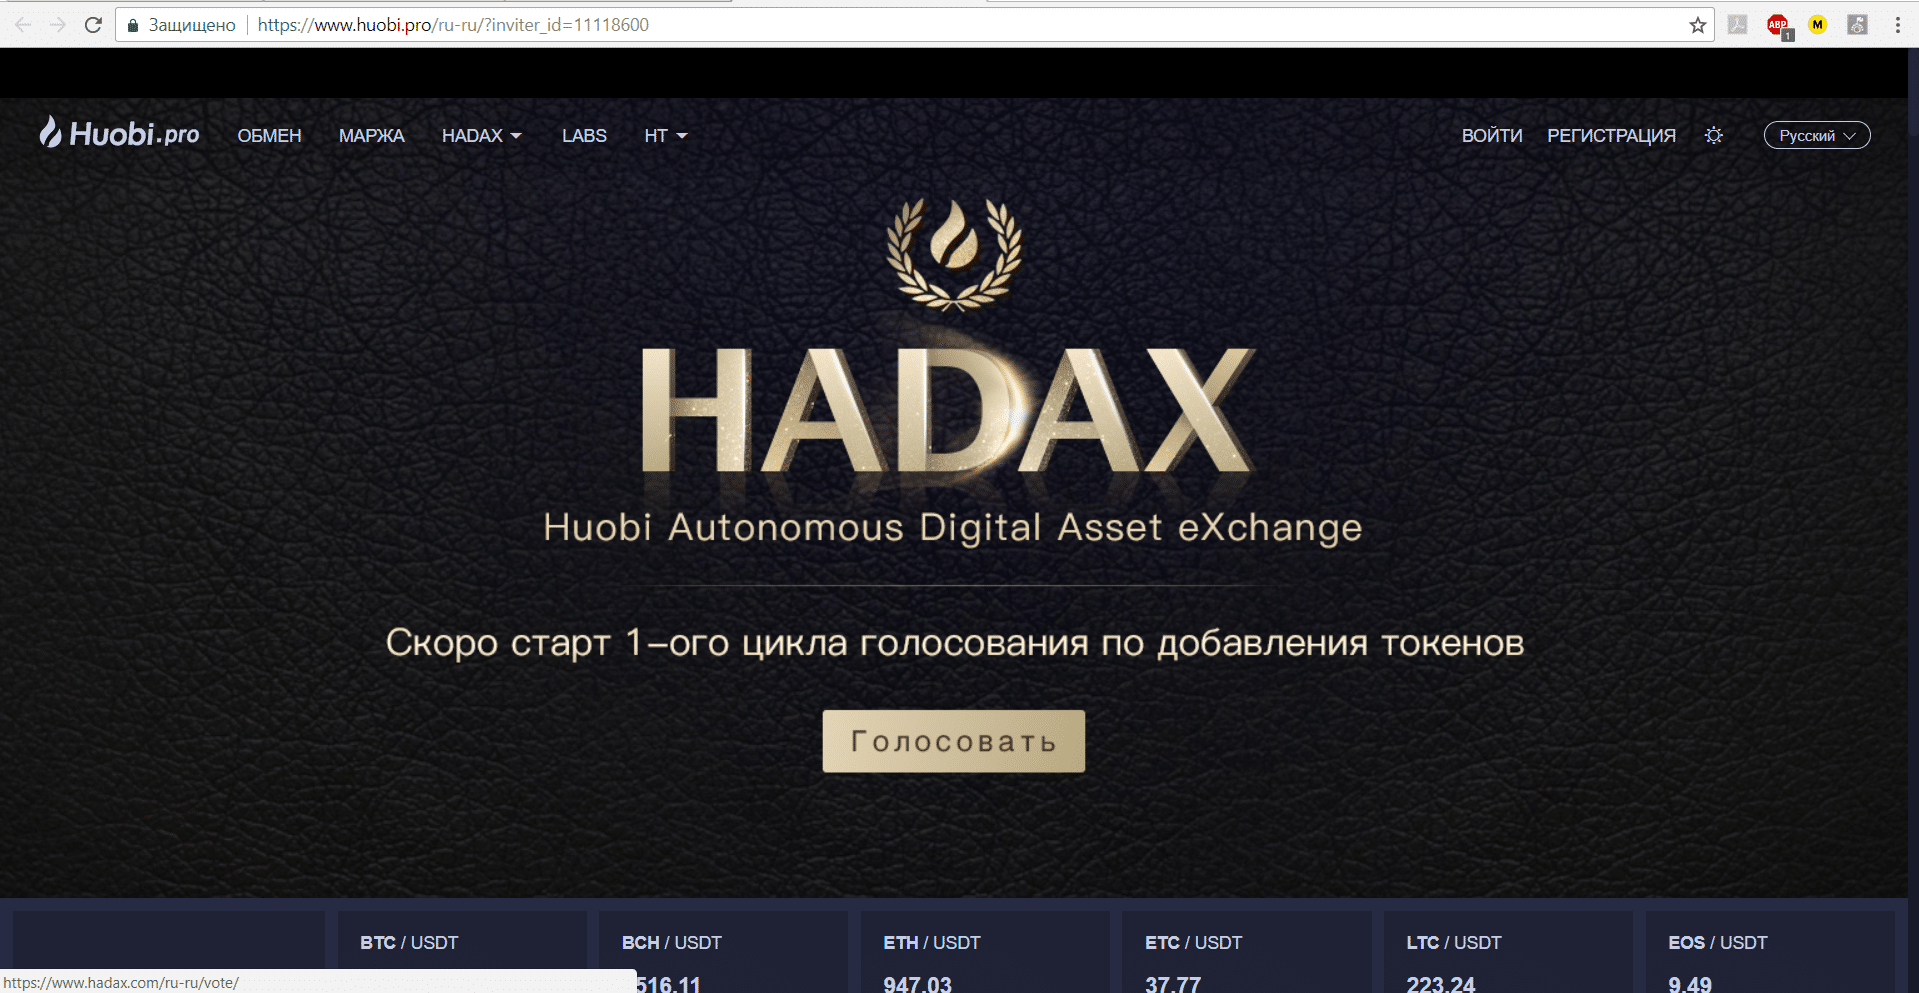 Hadax crypto forex no deposit bonuses for silver